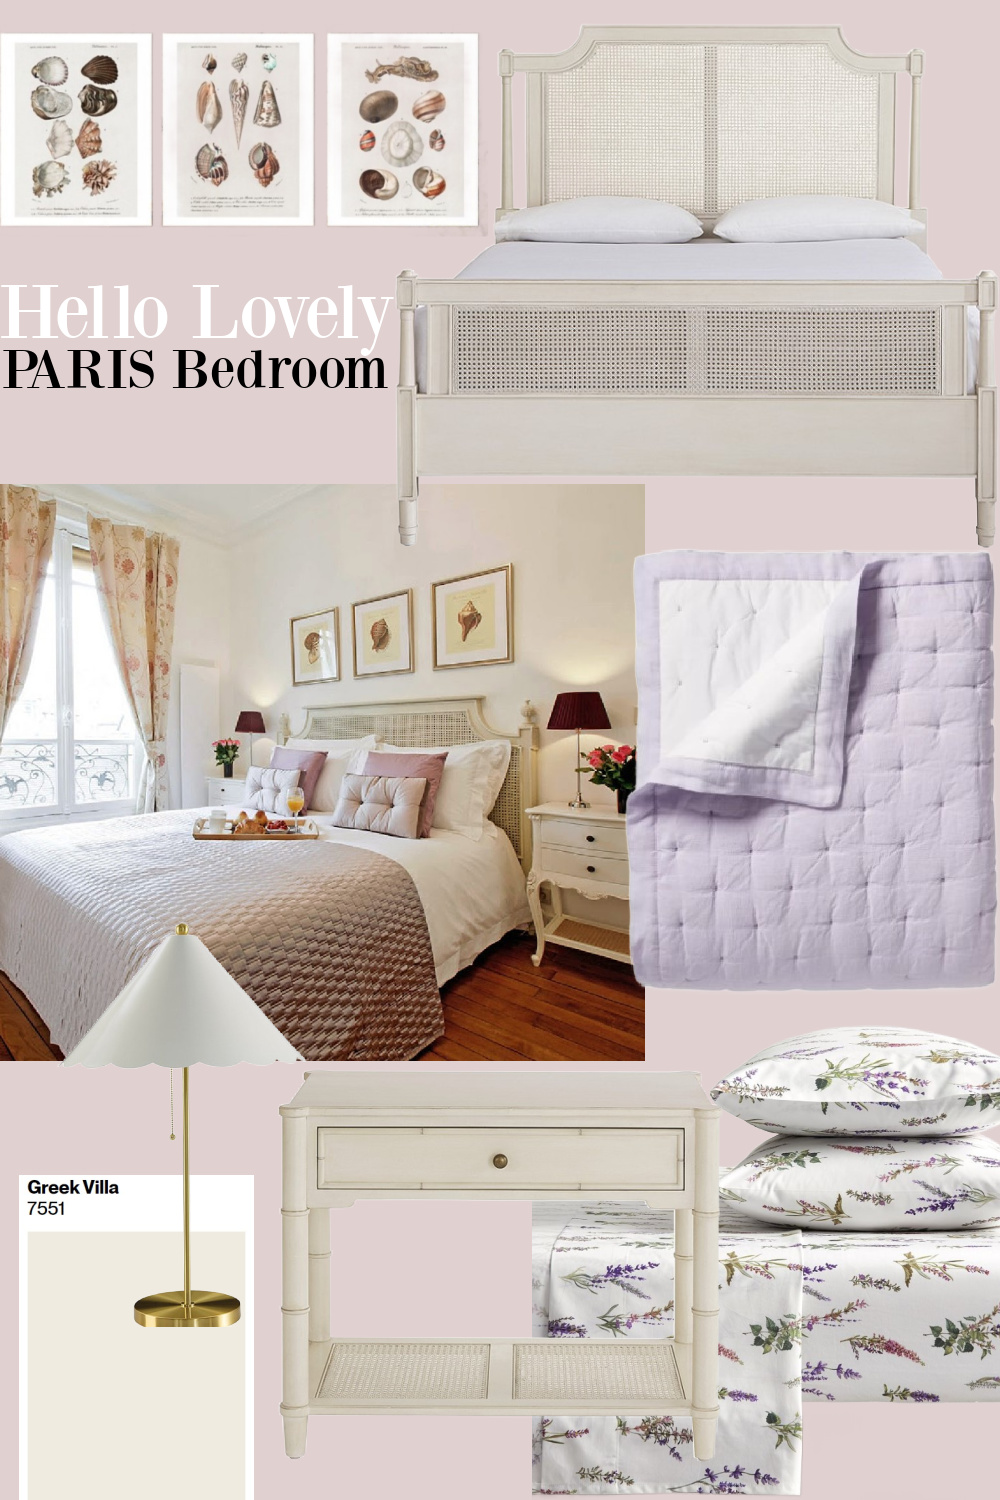 Hello Lovely PARIS BEDROOM: Get the Look from Hello Lovely Studio. #romanticbedroom #shopthelook #parisbedroom